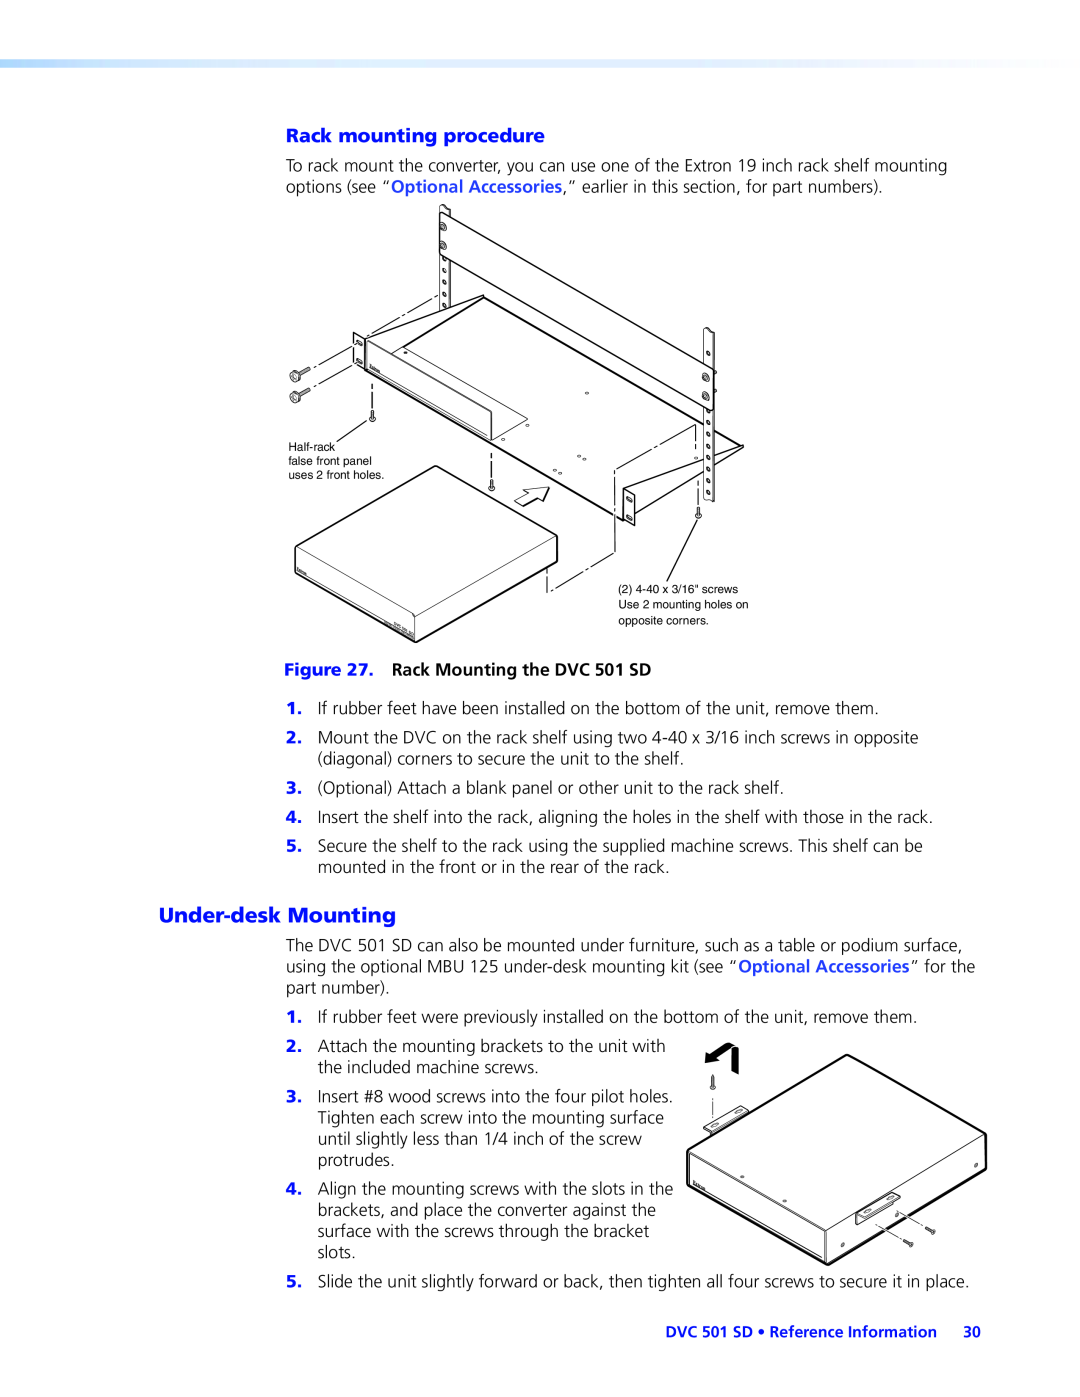 Extron electronic DVC501SD manual Under-deskMounting, Rack mounting procedure 